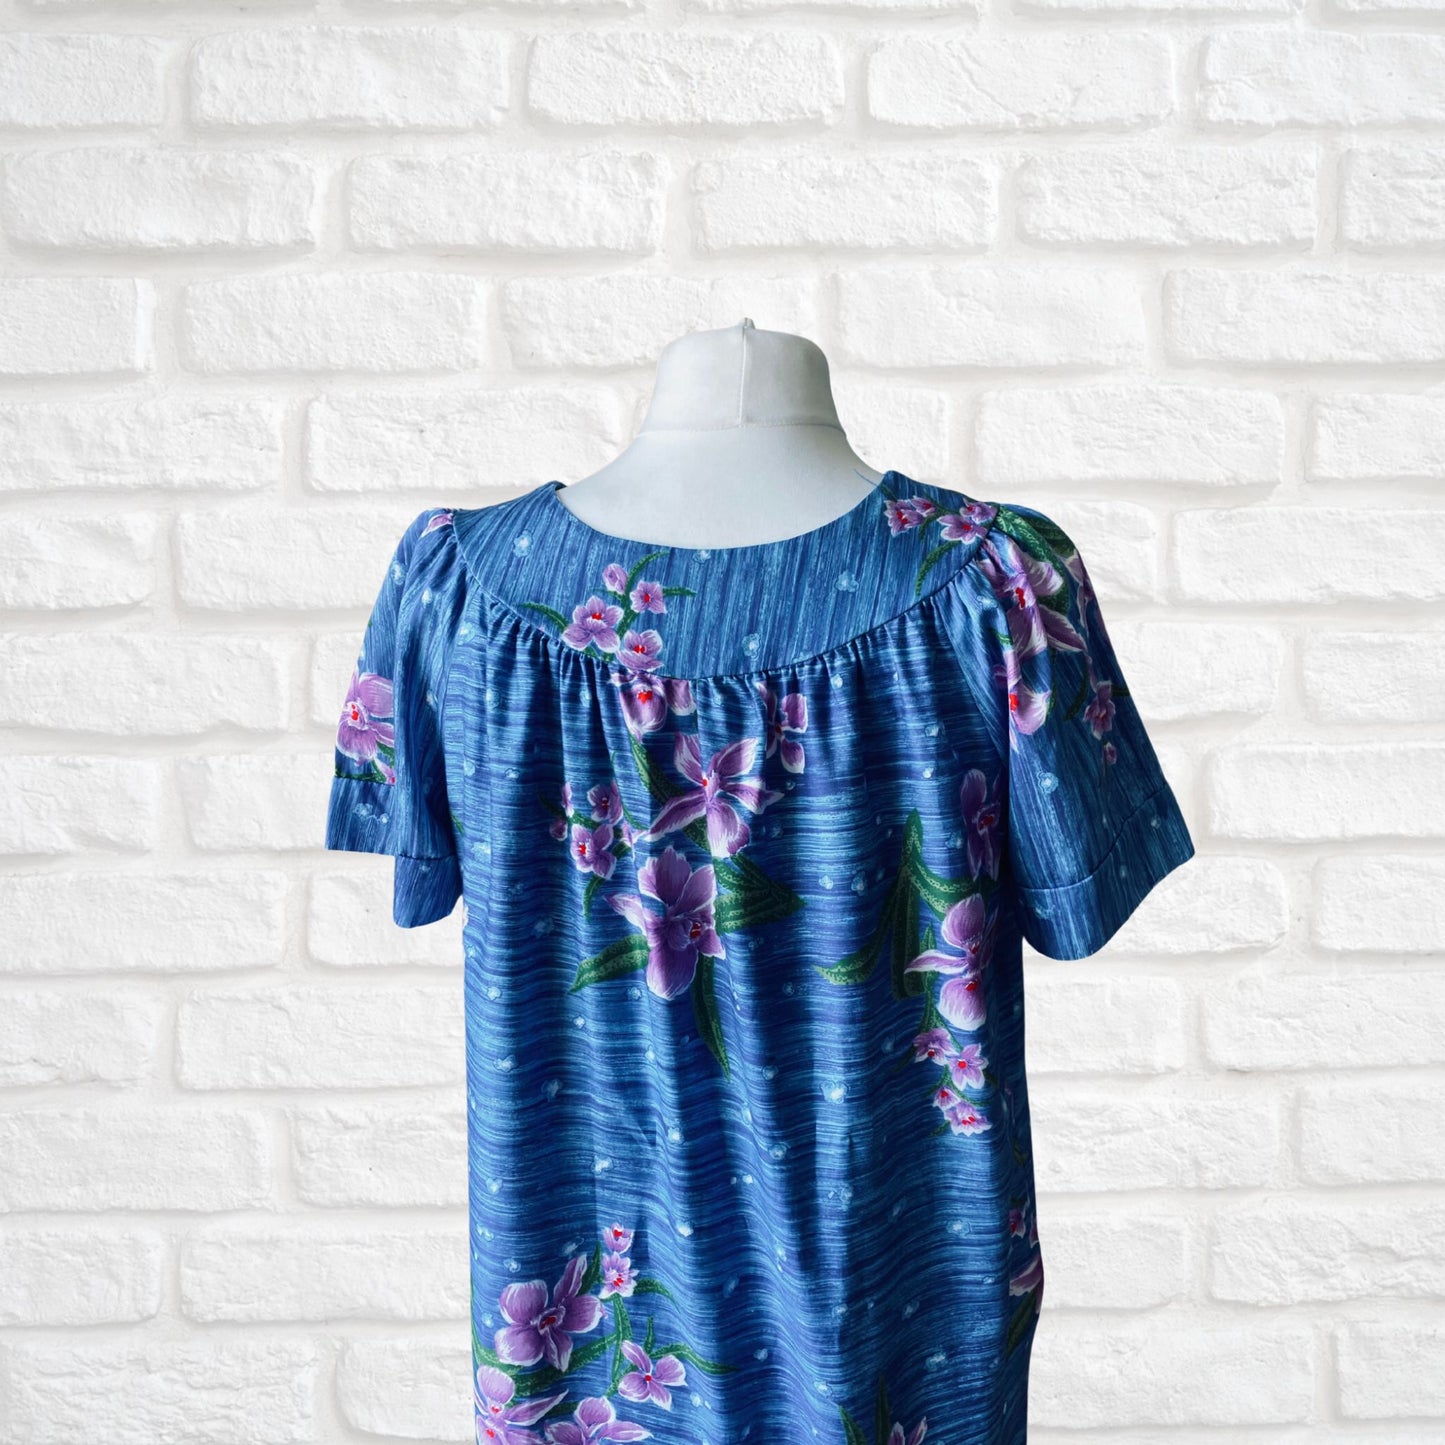 Cotton blue Hawaiian print vintage smock dress/ kaftan. Approx UK size 16-24